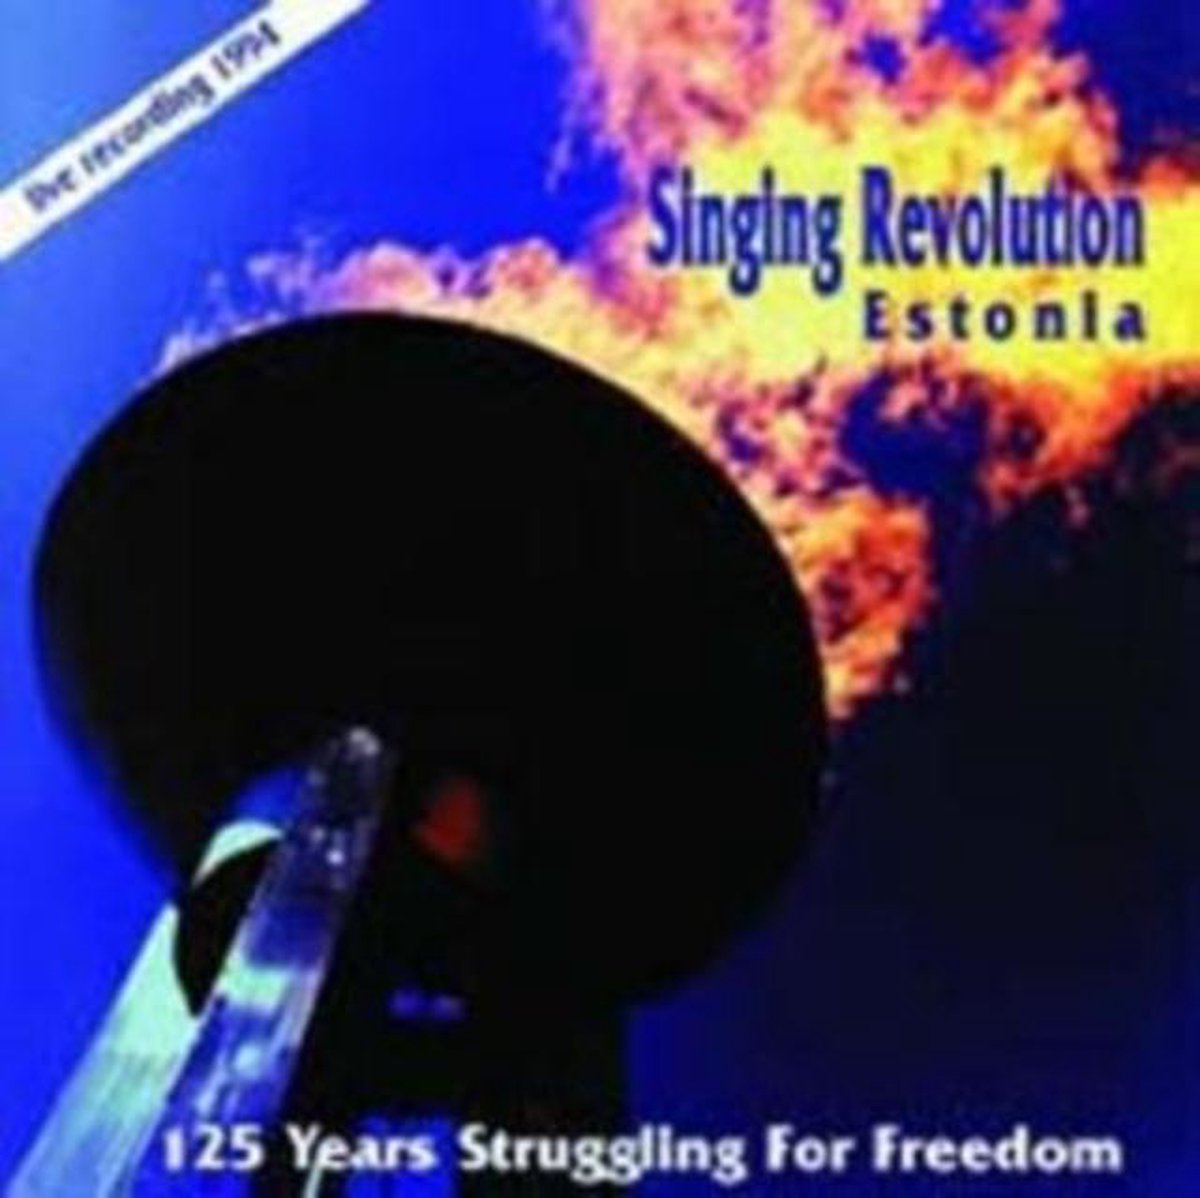 Singing Revolution Estoni - various artists